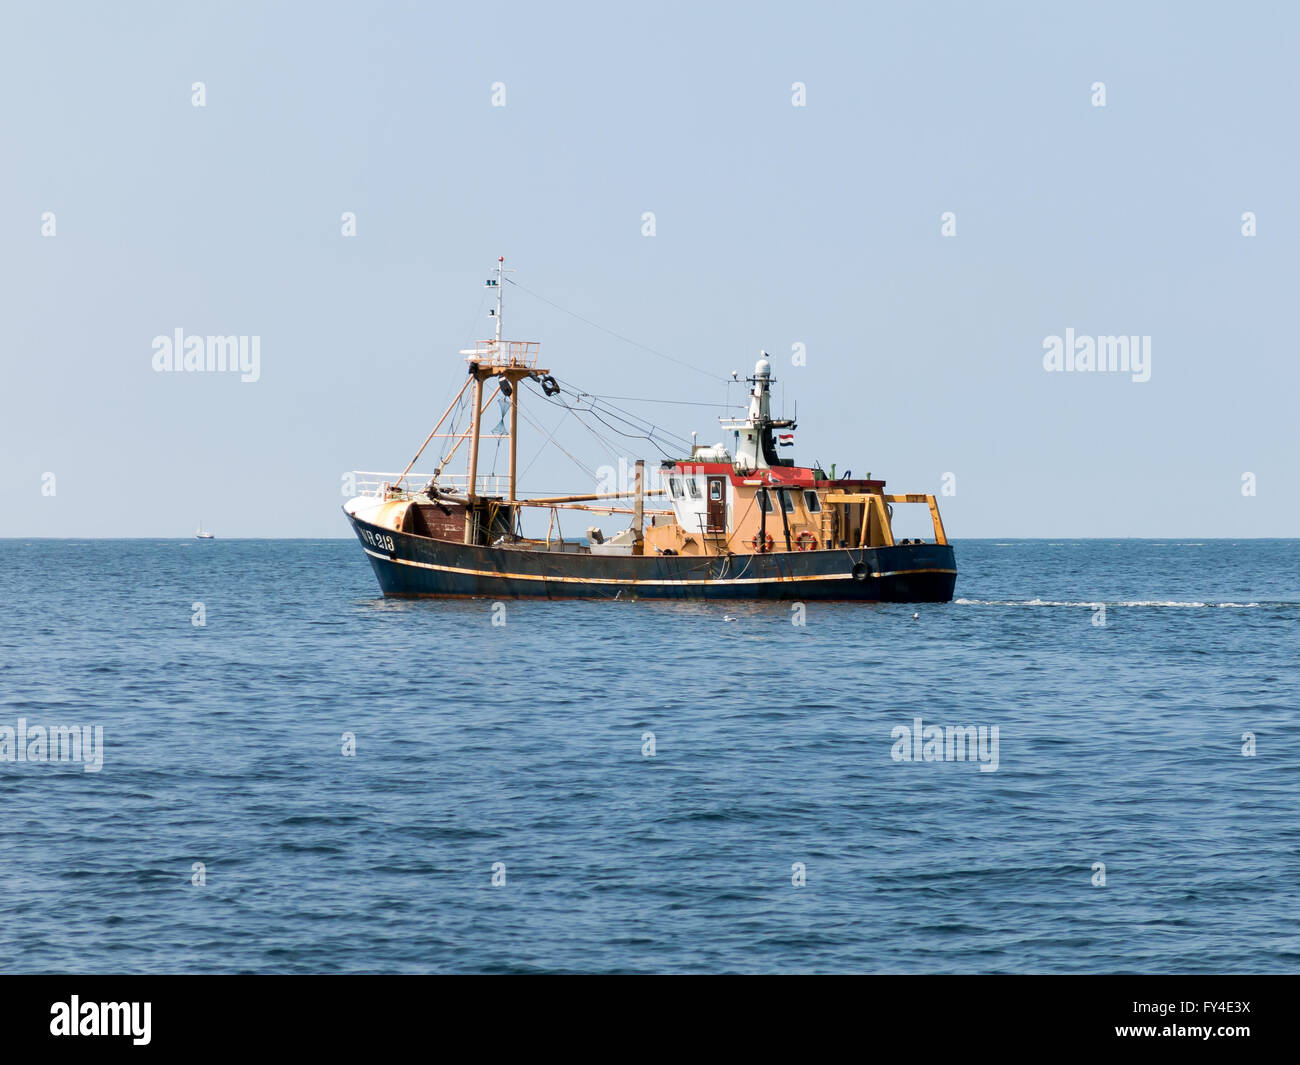 Dutch shrimper or shrimp cutter fishing boat on the Wadden Sea, Netherlands Stock Photo